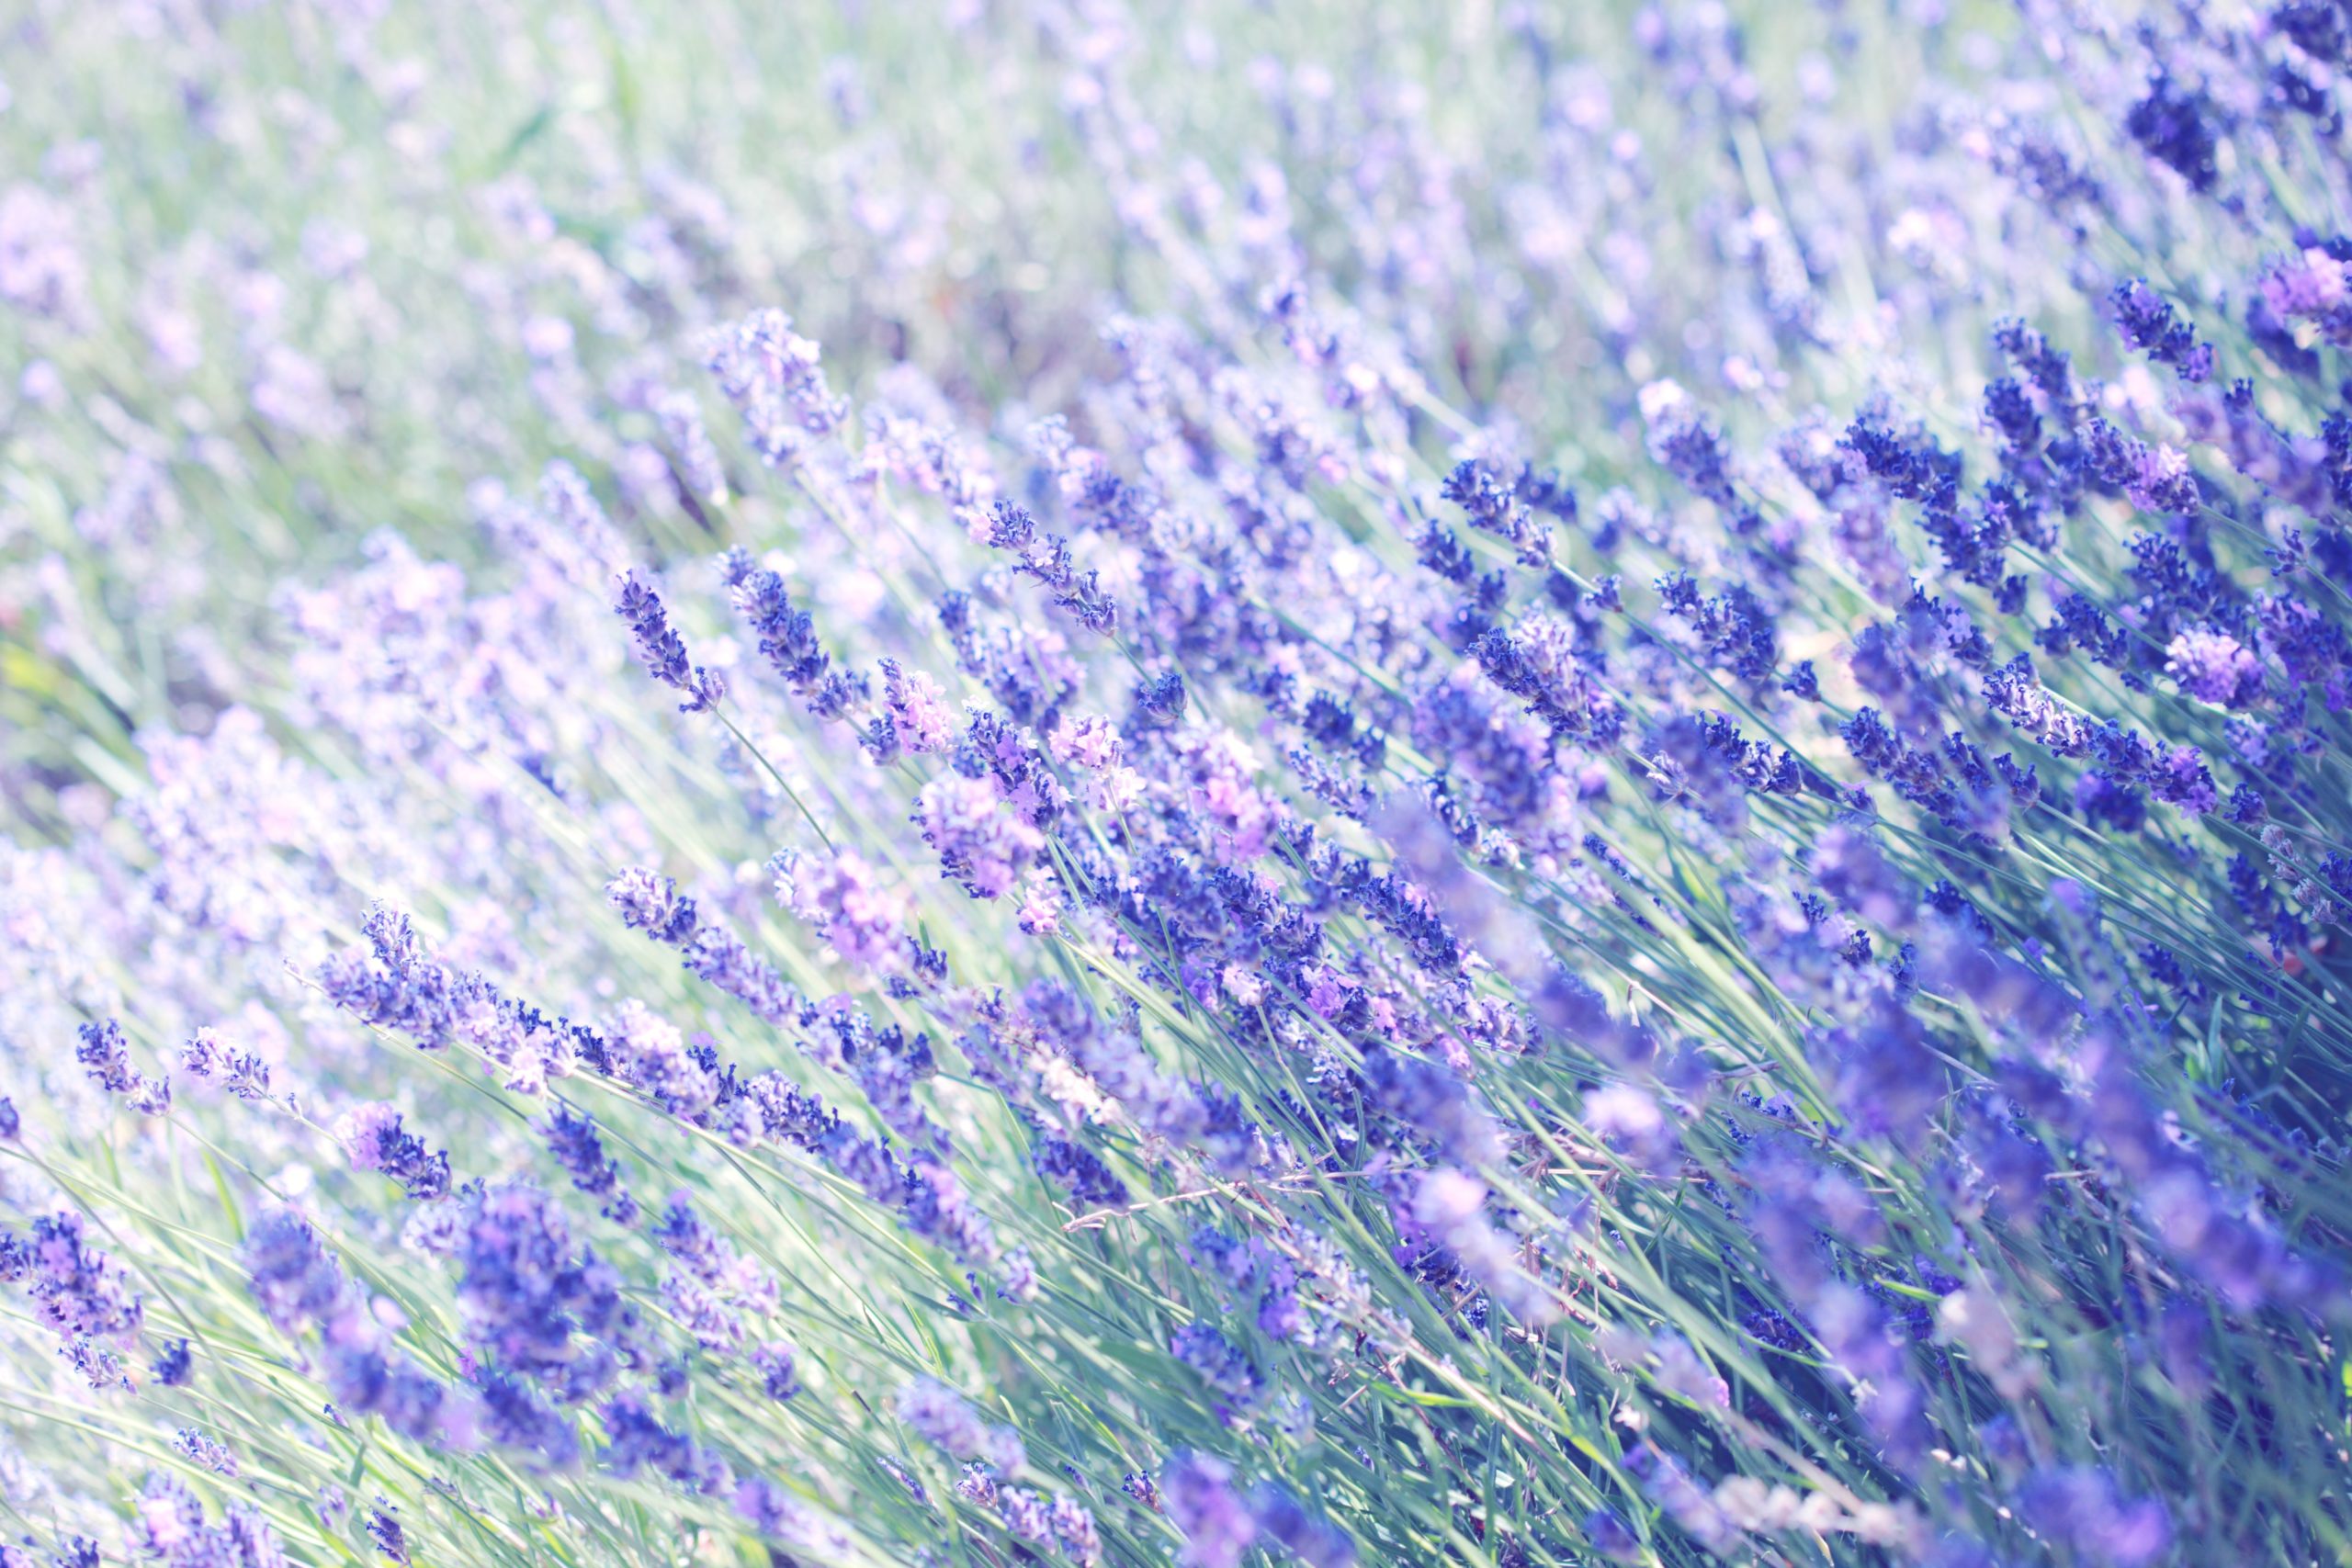 <img src="purple.jpg" alt="purple lavender field close up"/> 